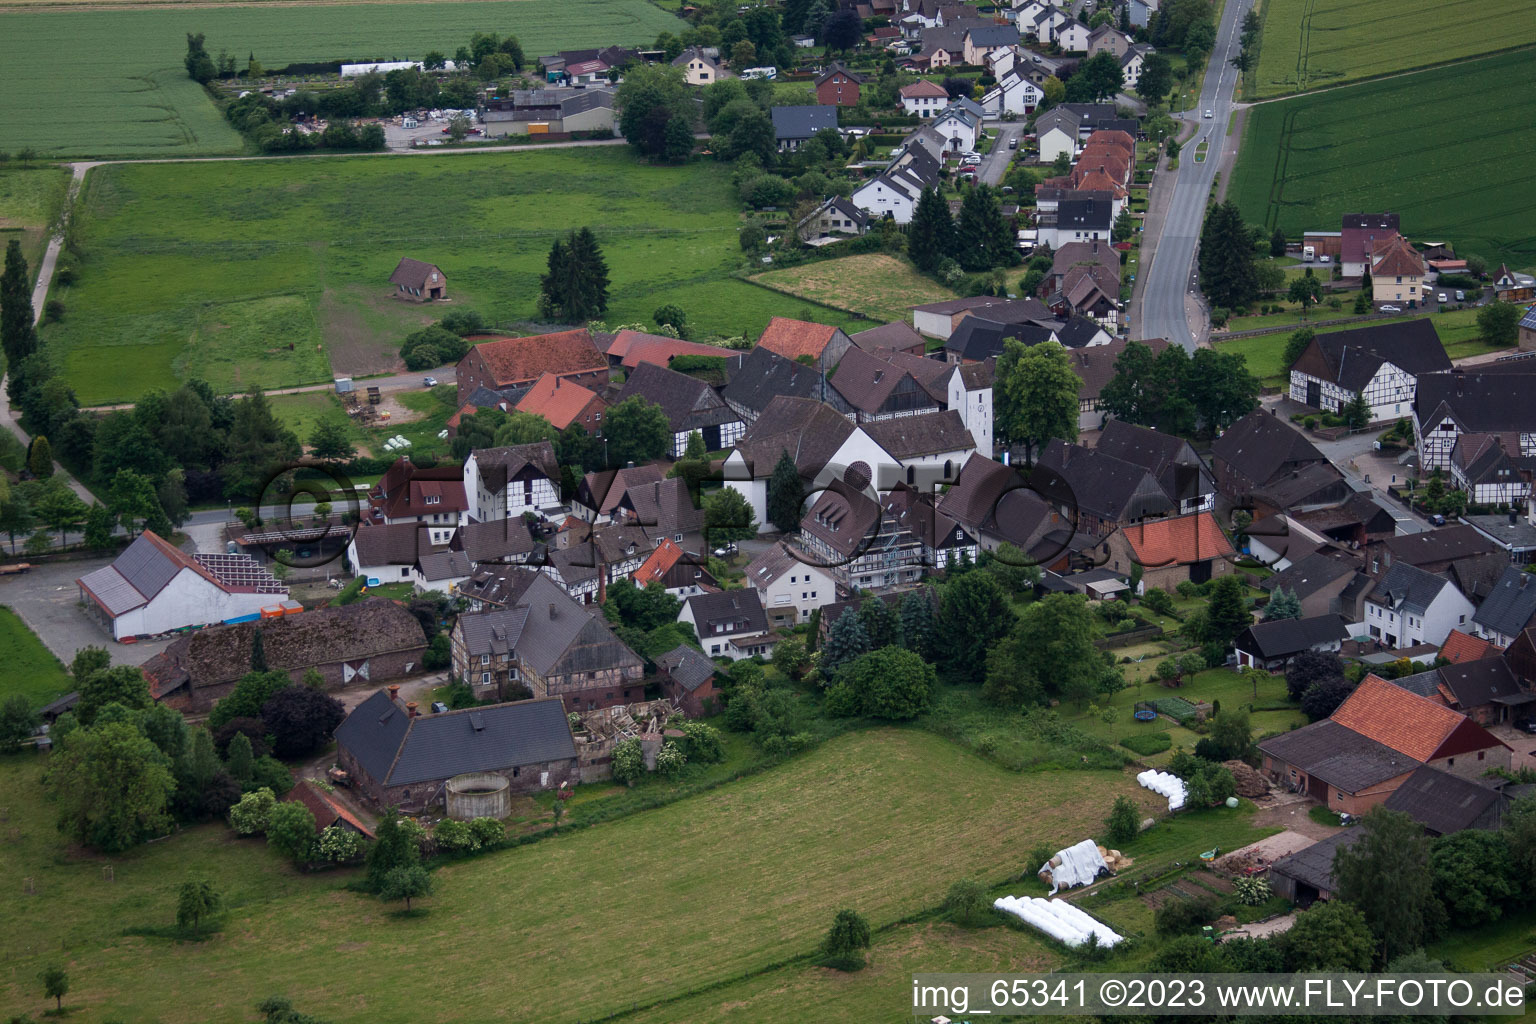 Godelheim in the state North Rhine-Westphalia, Germany seen from above